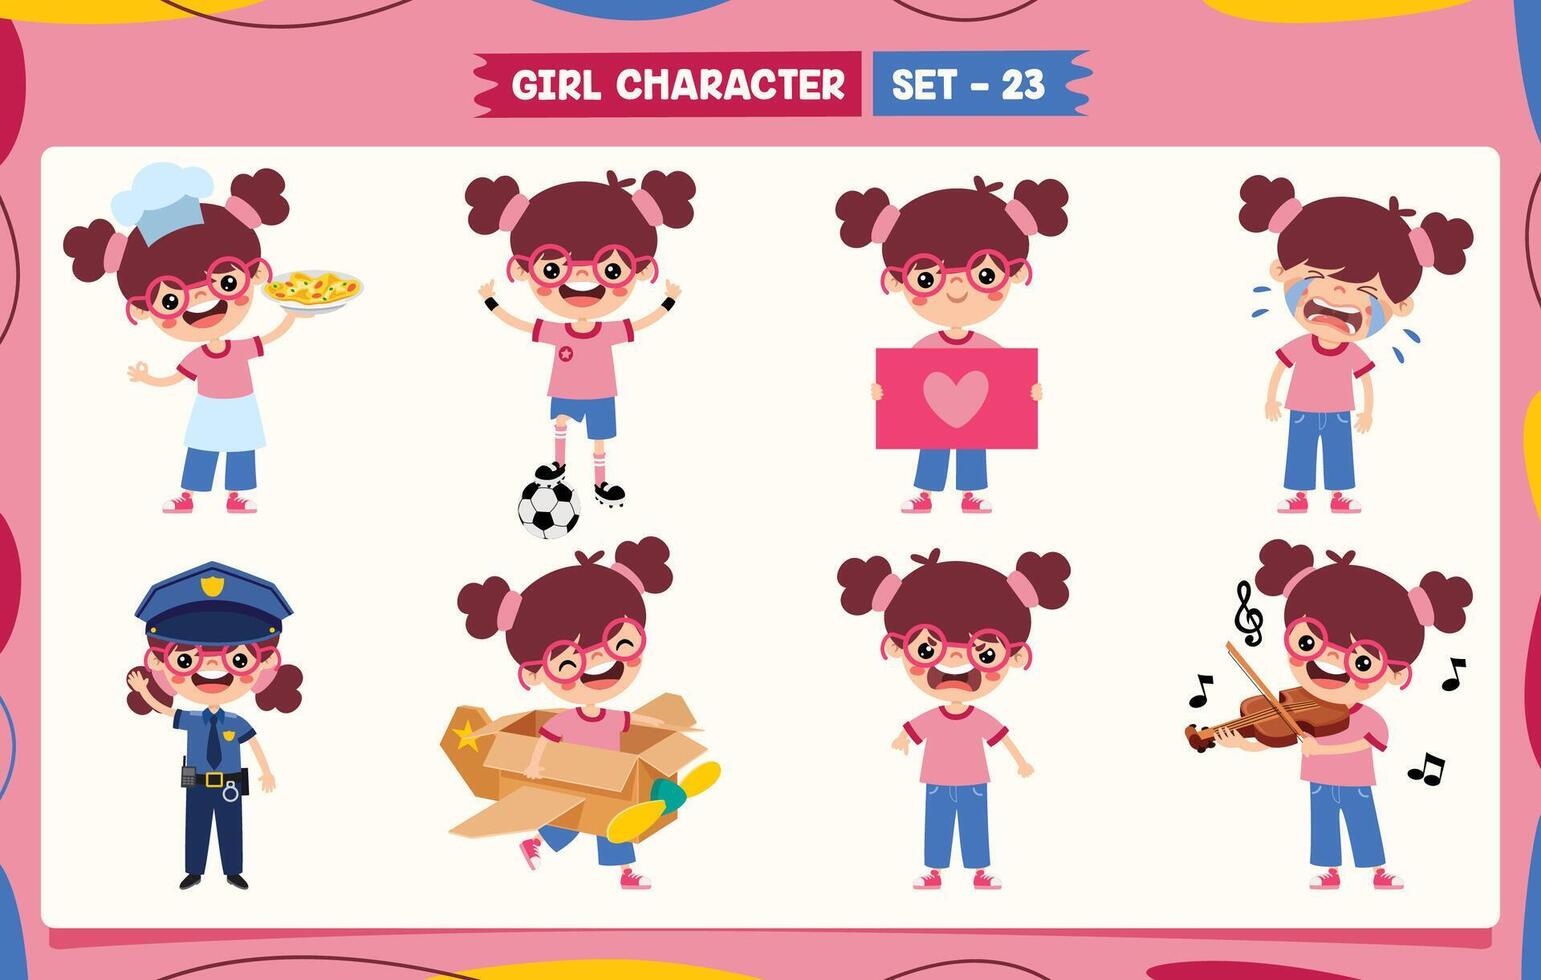 Cartoon Girl Doing Various Activities vector